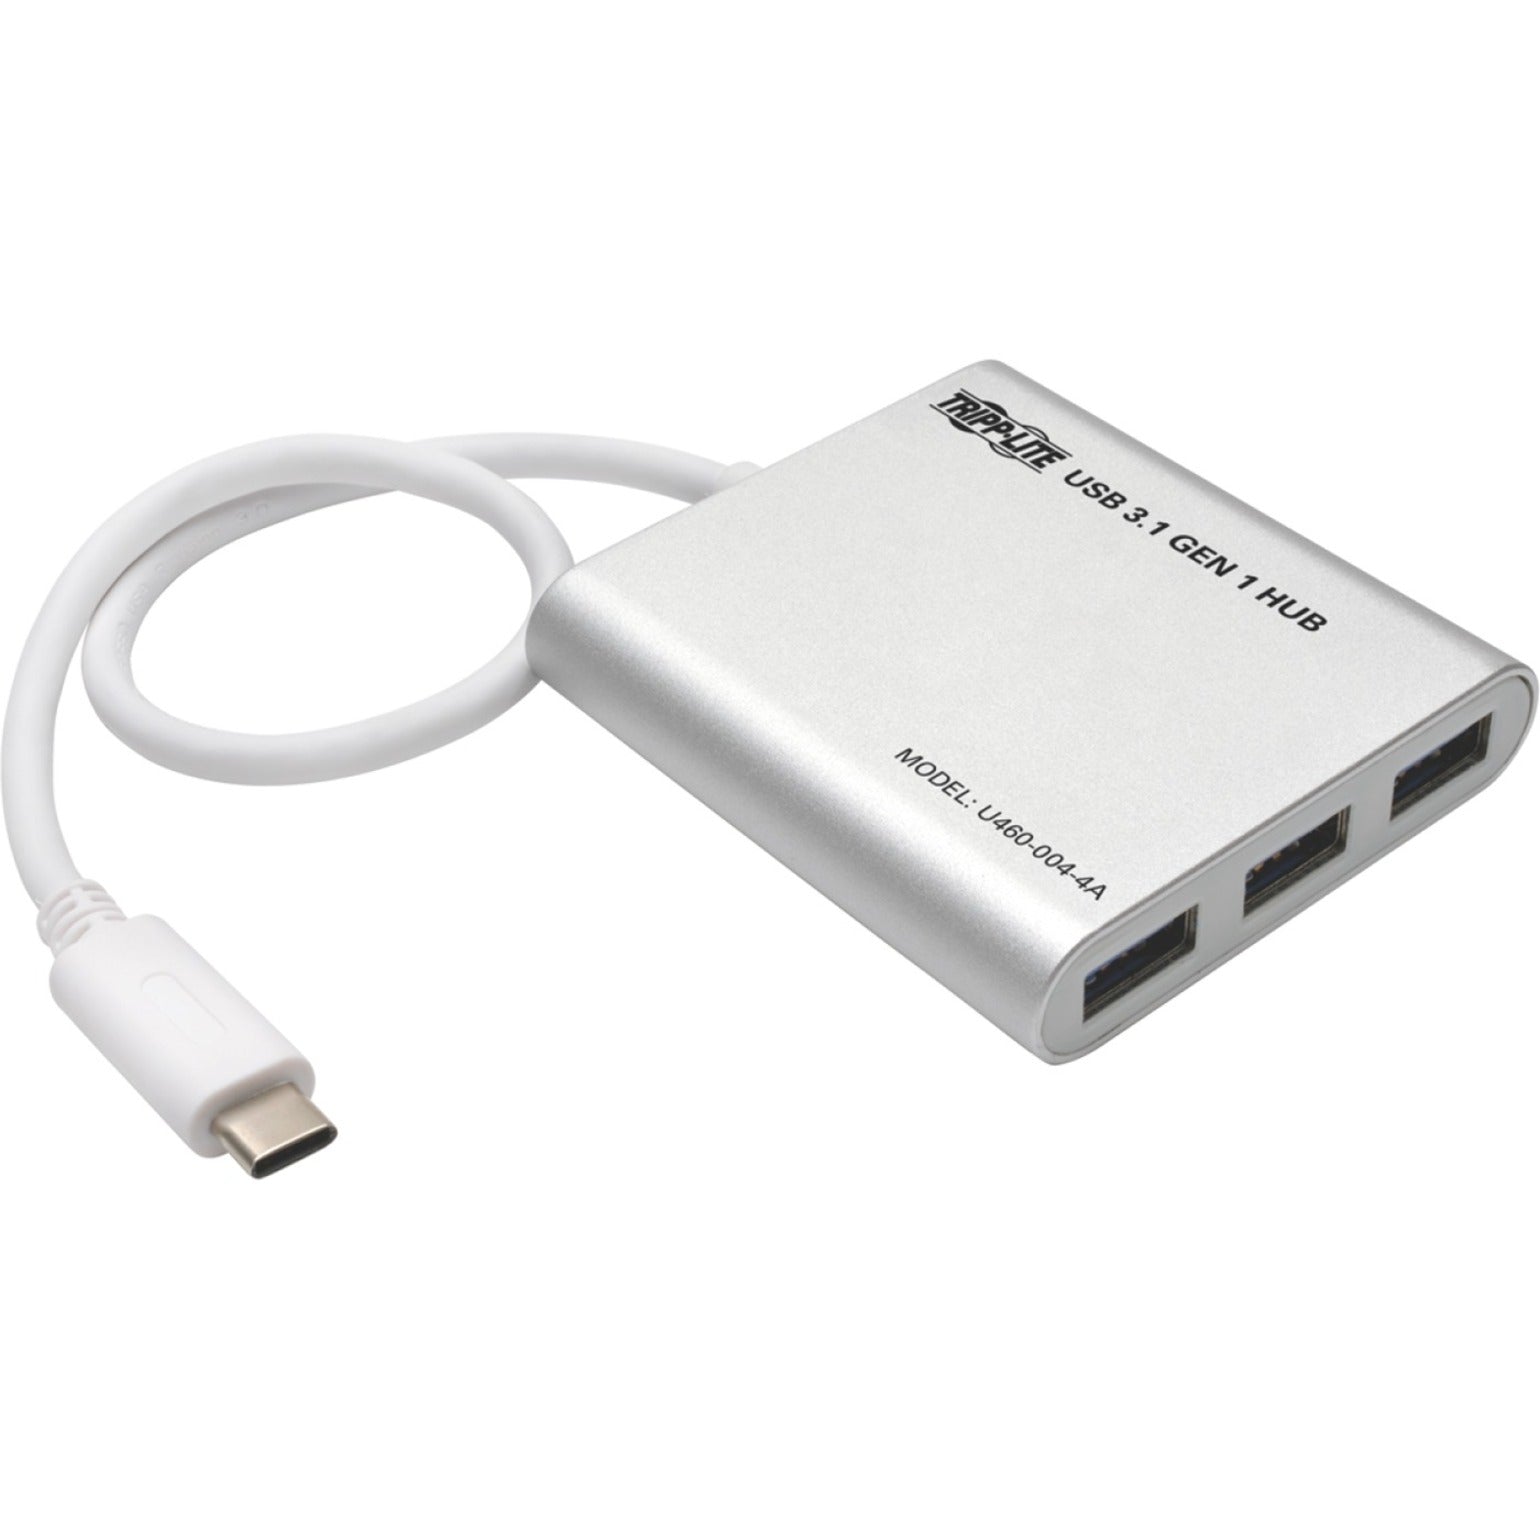 Tripp Lite U460-004-4A 4-Port Portable USB 3.1 Gen 1 Hub, Aluminum, 3 Year Warranty, RoHS Certified